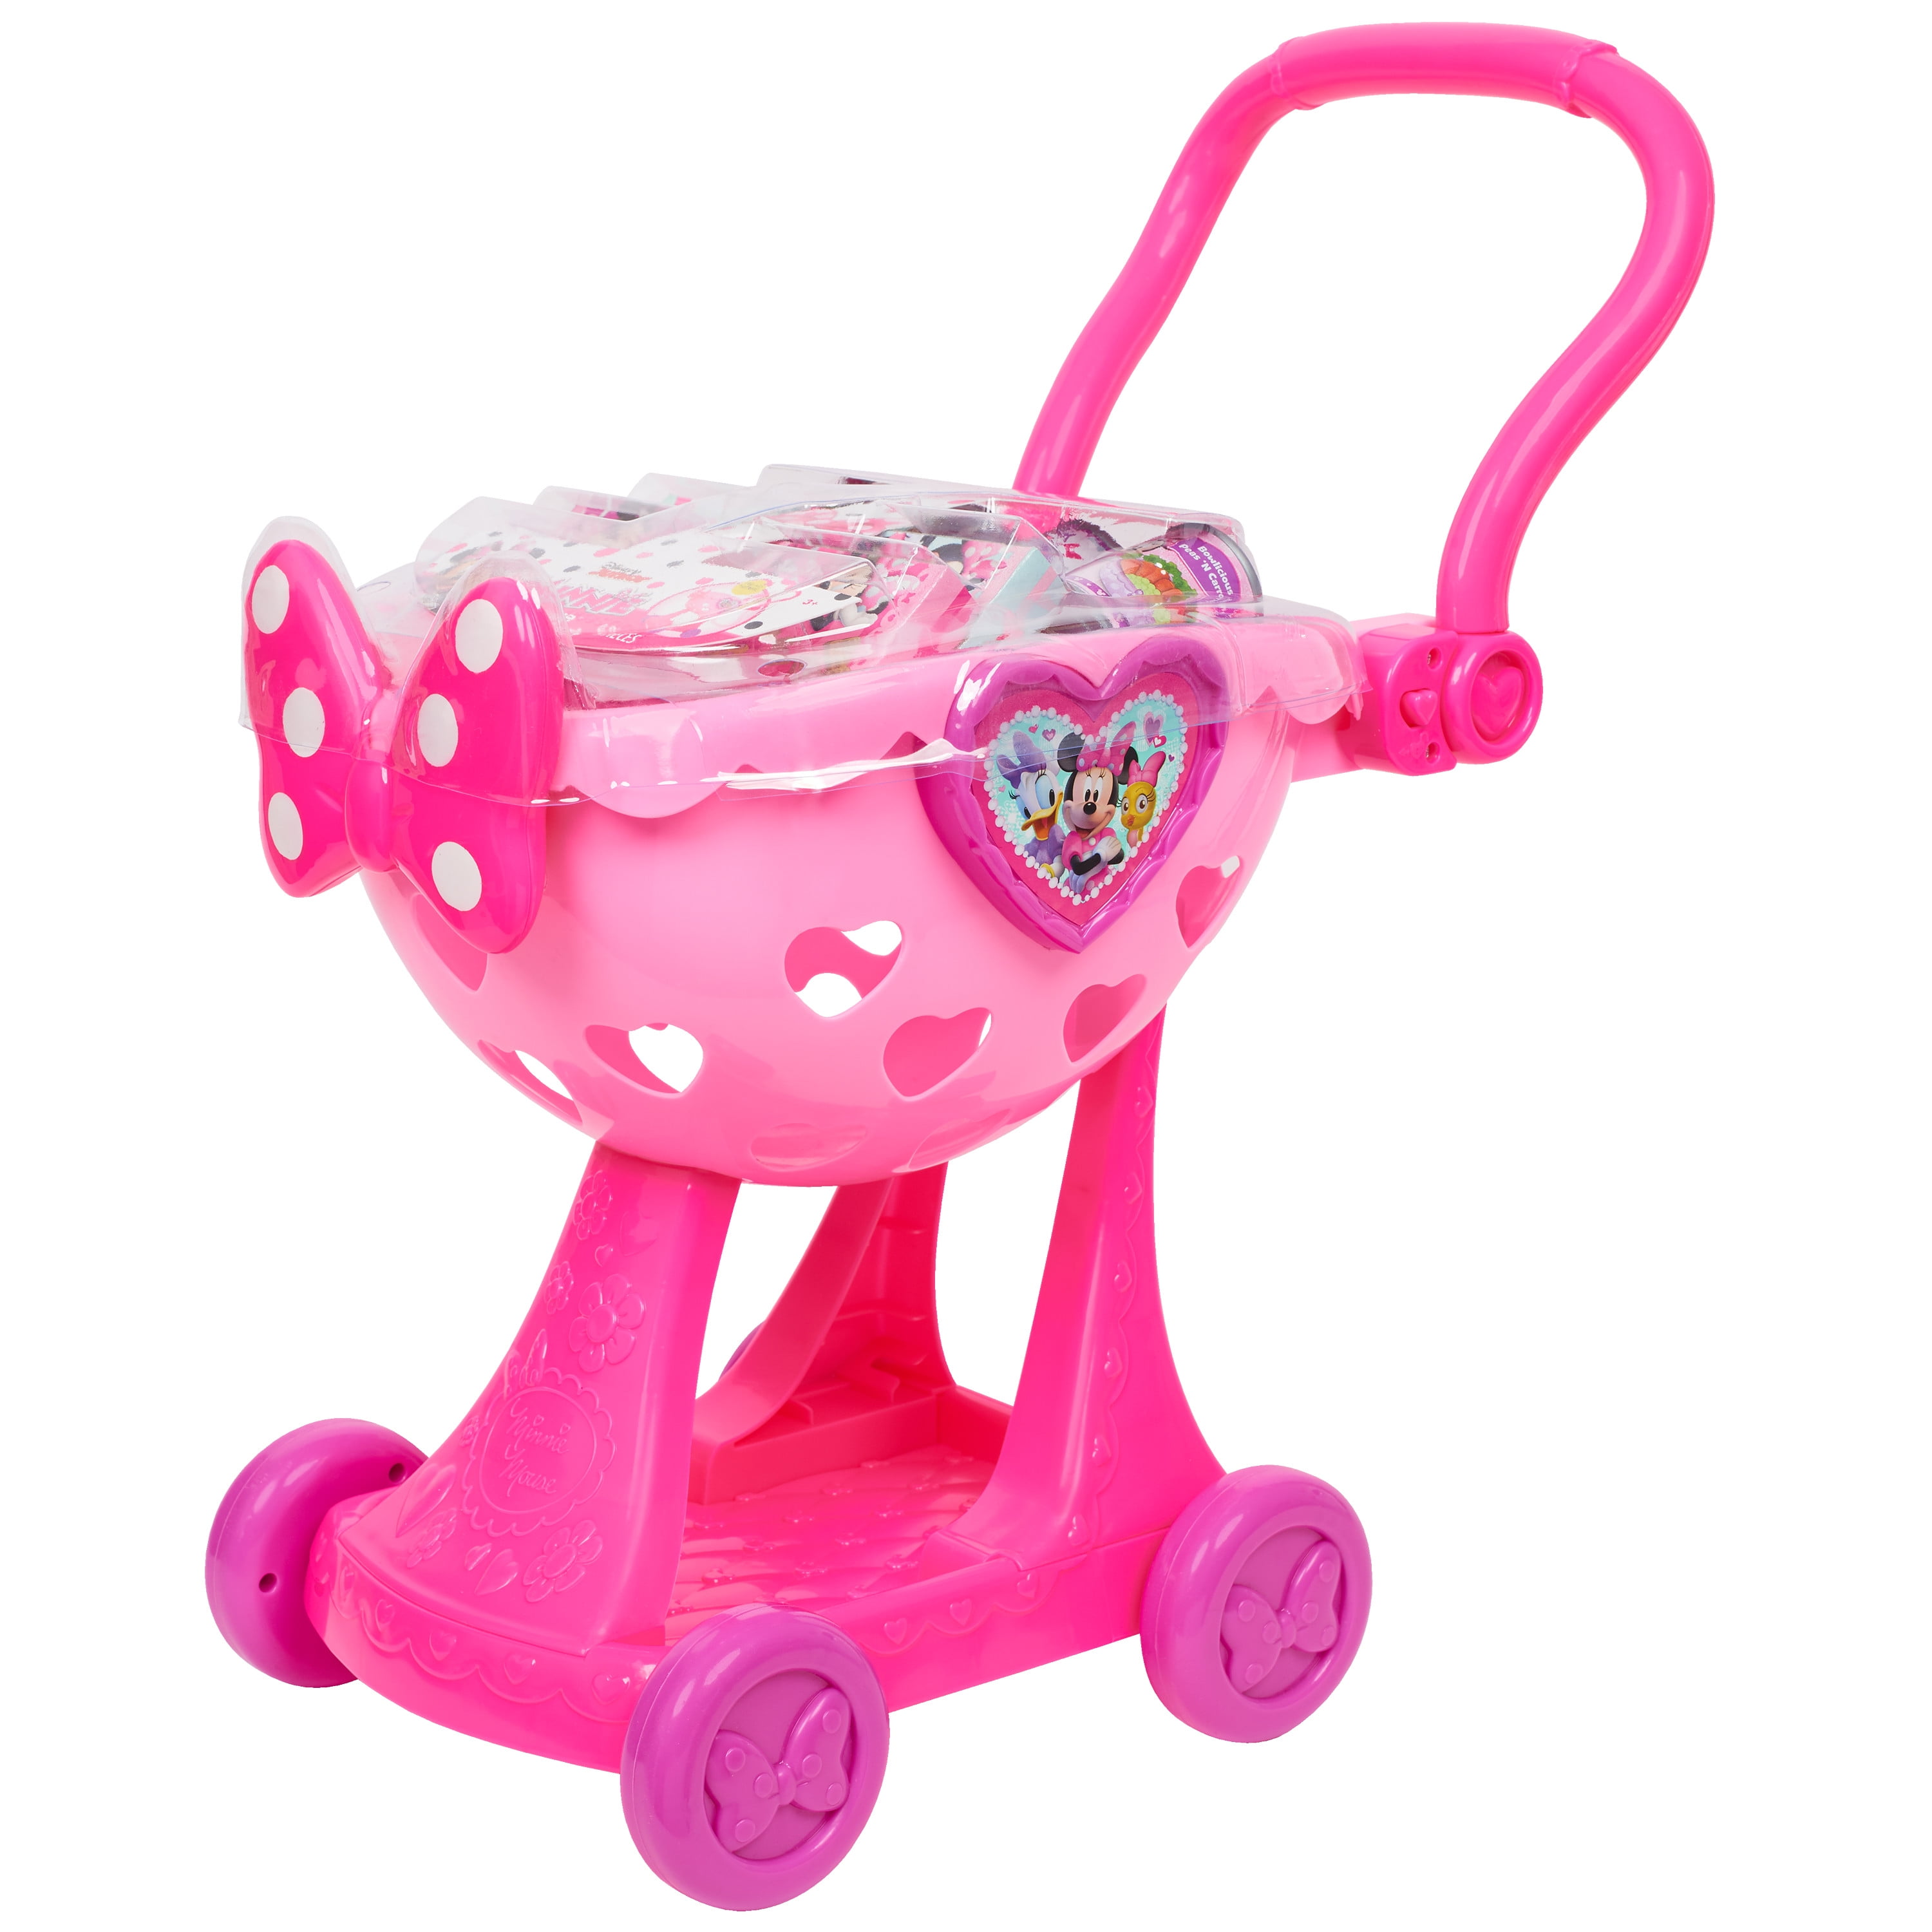 Details about   Disney Minnie Mouse Flipping Kitchen Play Set Kids Fun Pretend Toy Set Pink NEW 